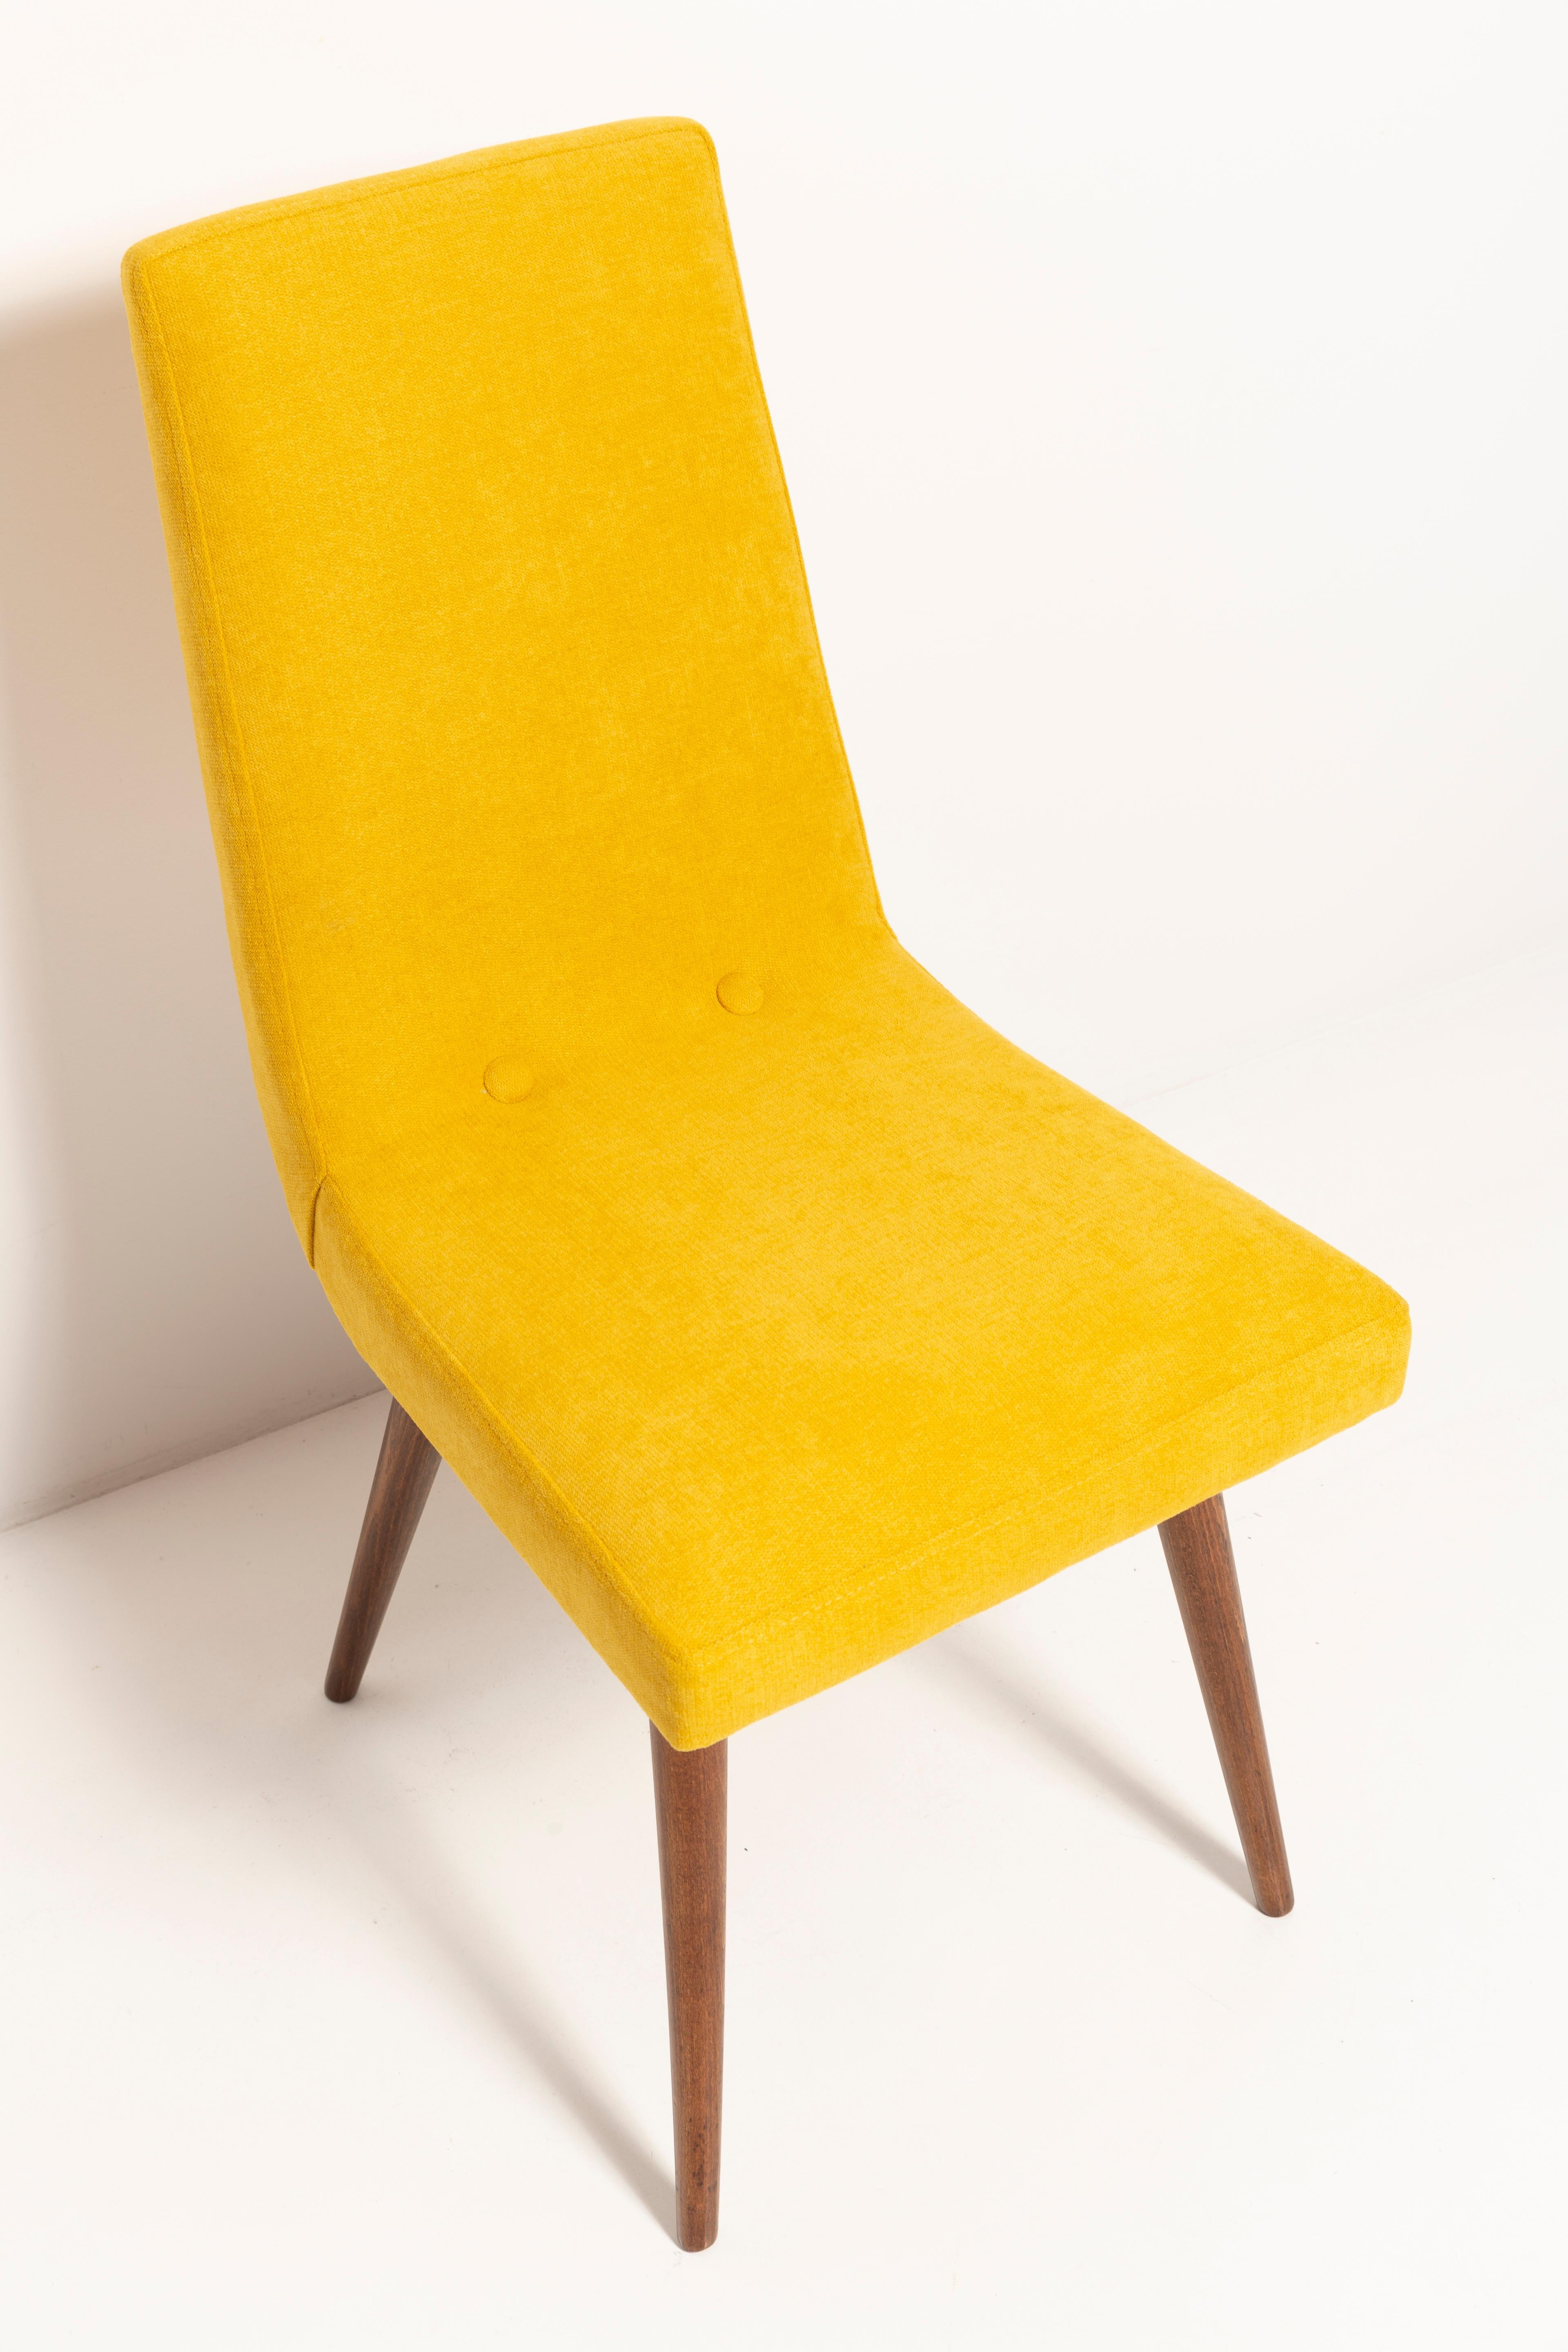 Set of Four 20th Century Mustard Yellow Wool Chair, Rajmund Halas Europe, 1960s For Sale 4